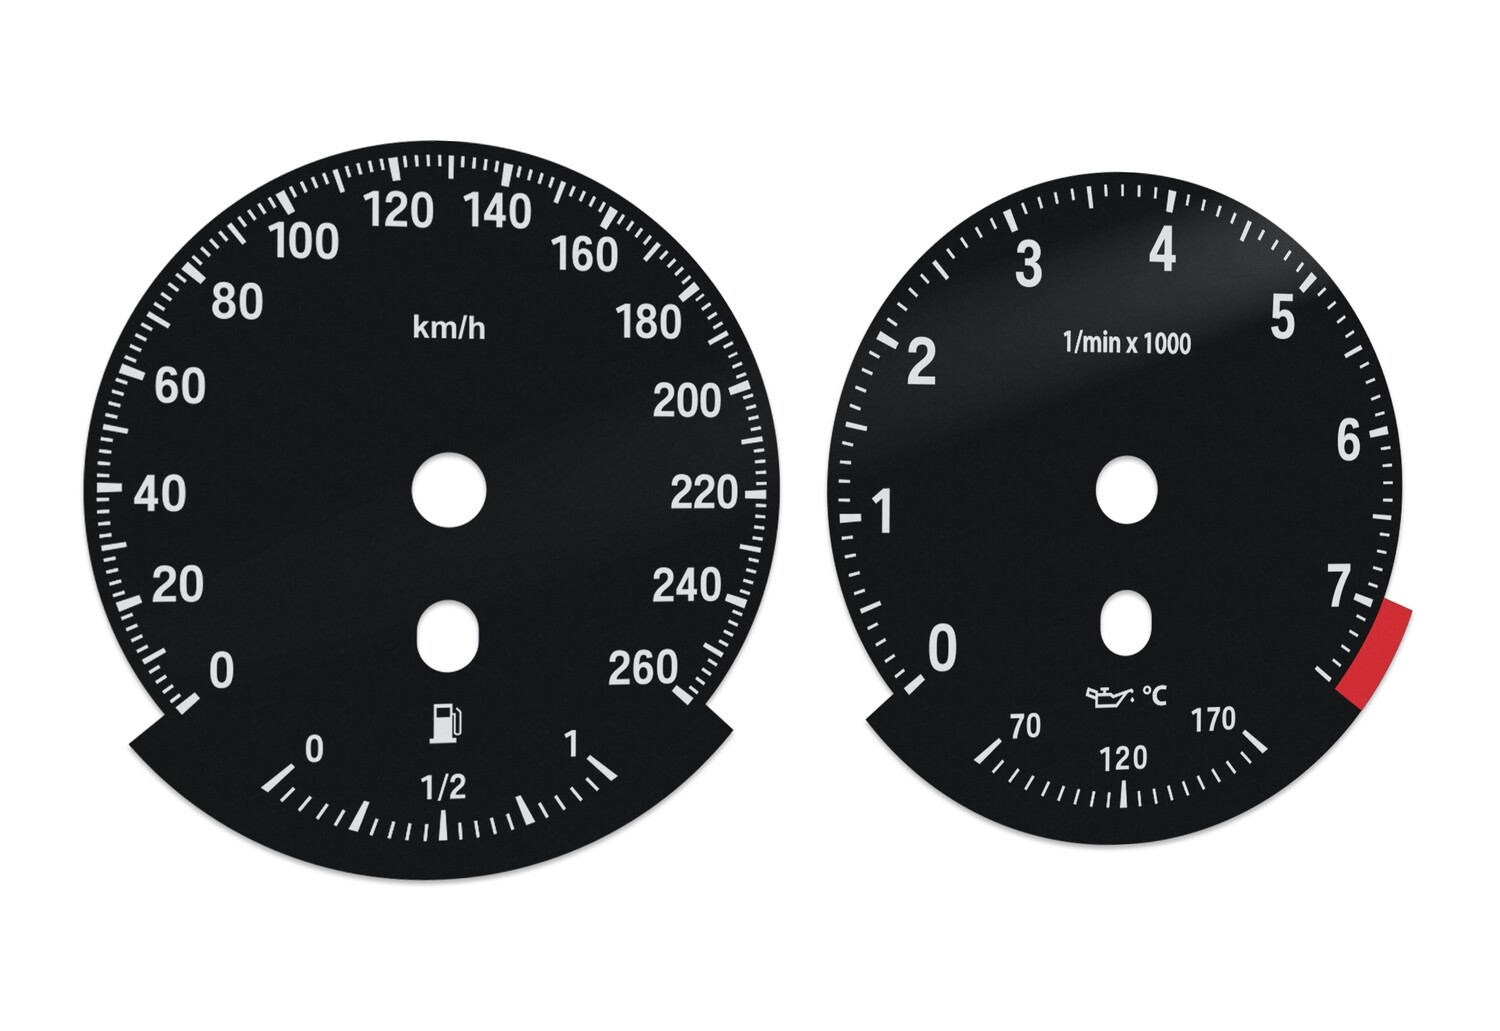 BMW 3 series E90, E92 - From MPH to km/h conversion dials